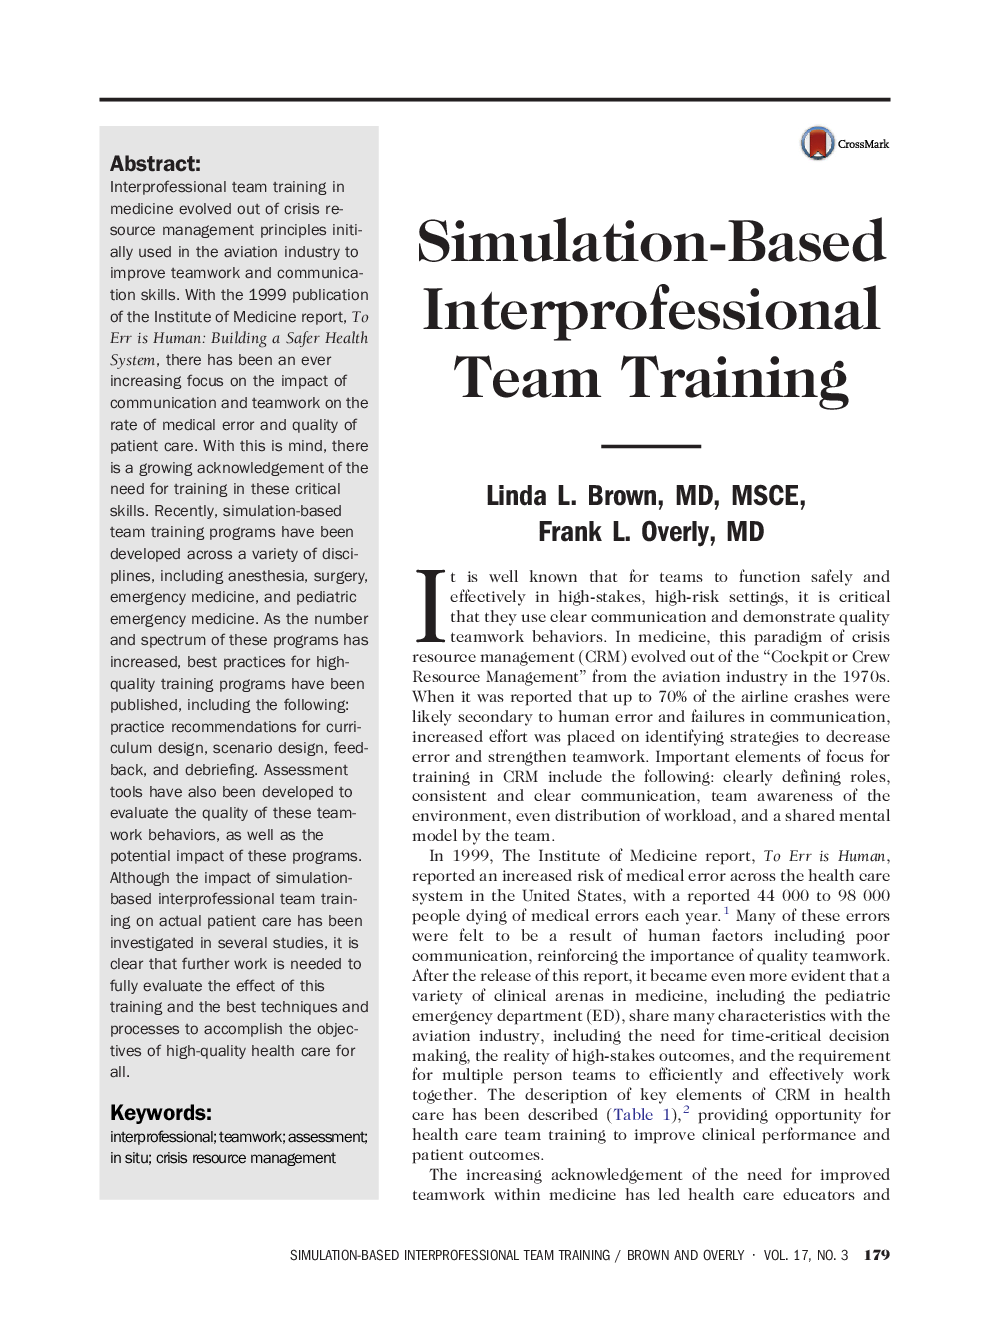 Simulation-Based Interprofessional Team Training